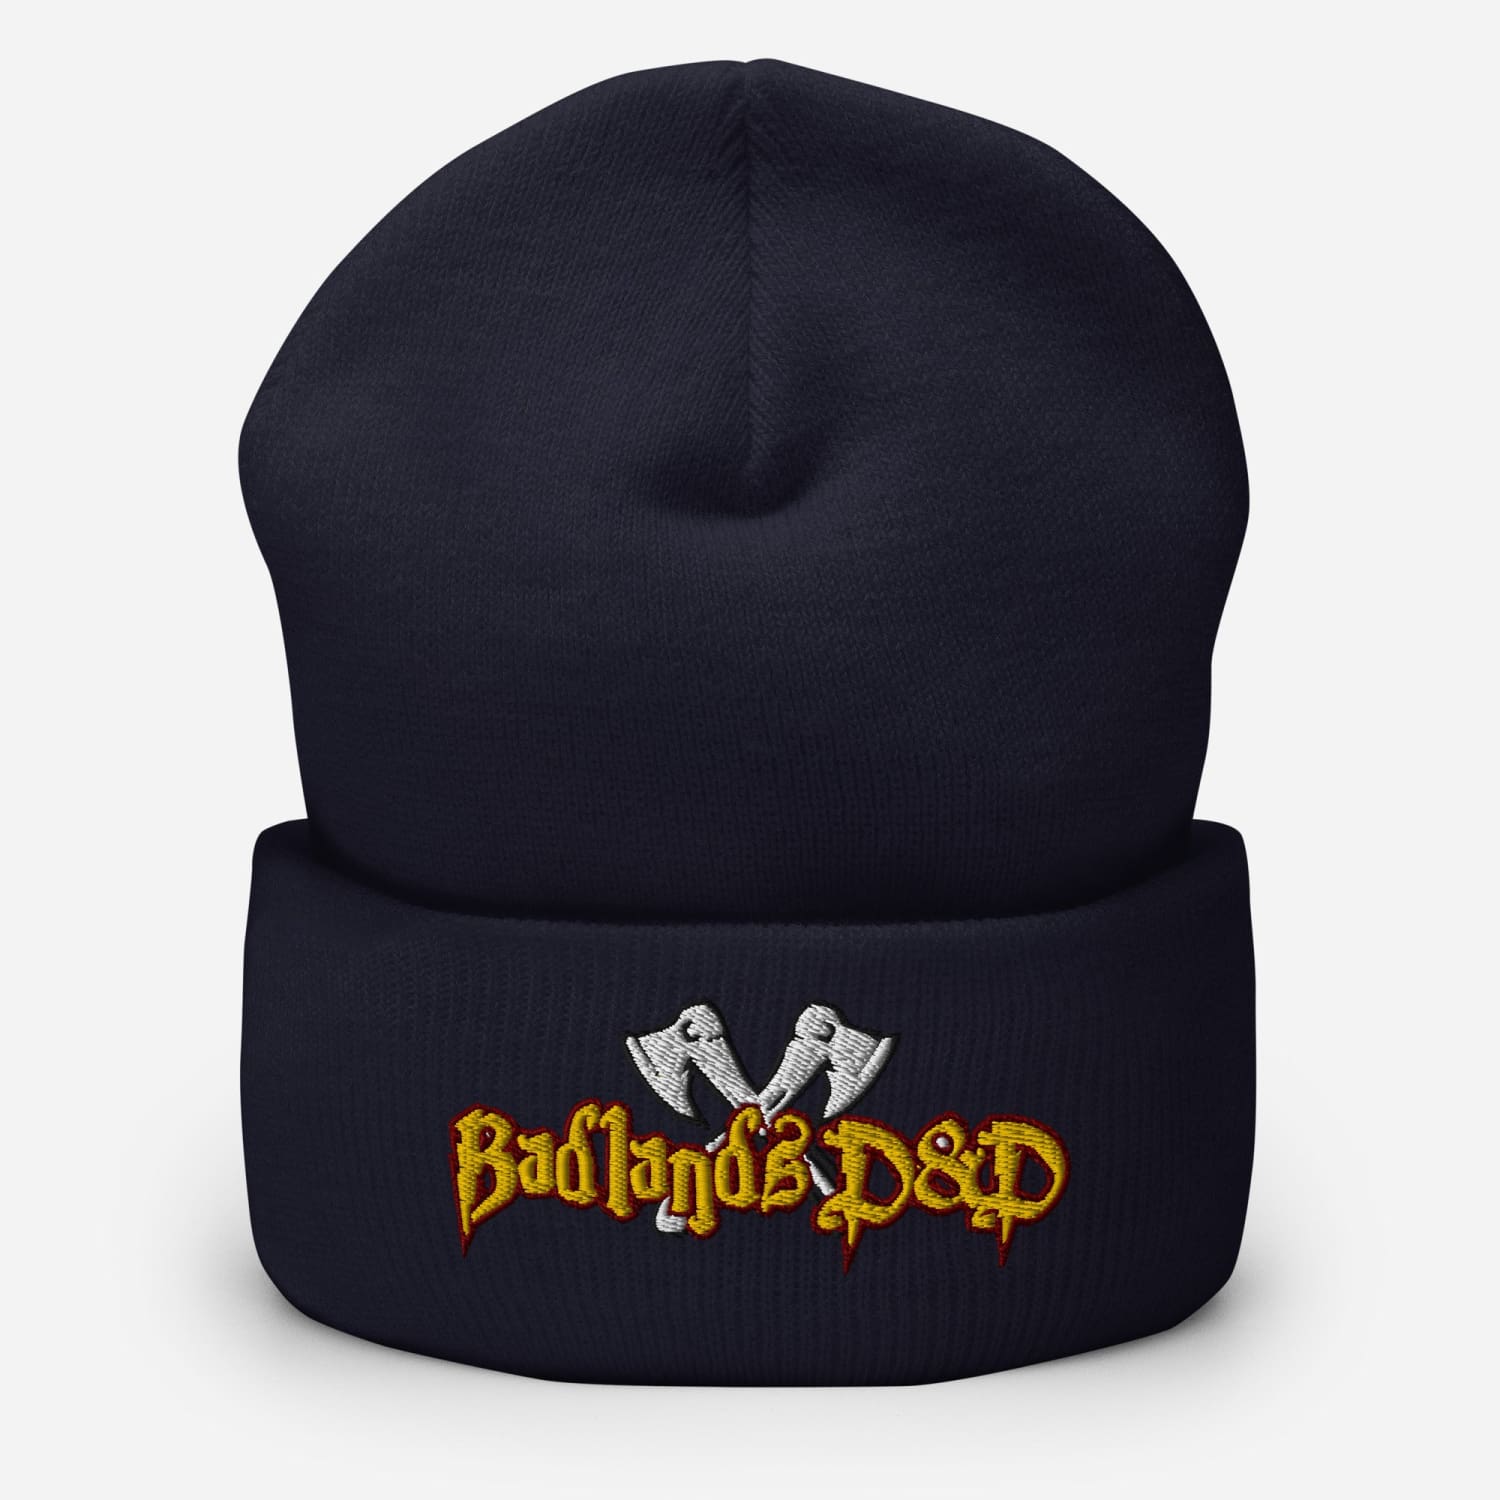 Badlands D&D Logo Cuffed Knit Beanie / Tuque - Navy